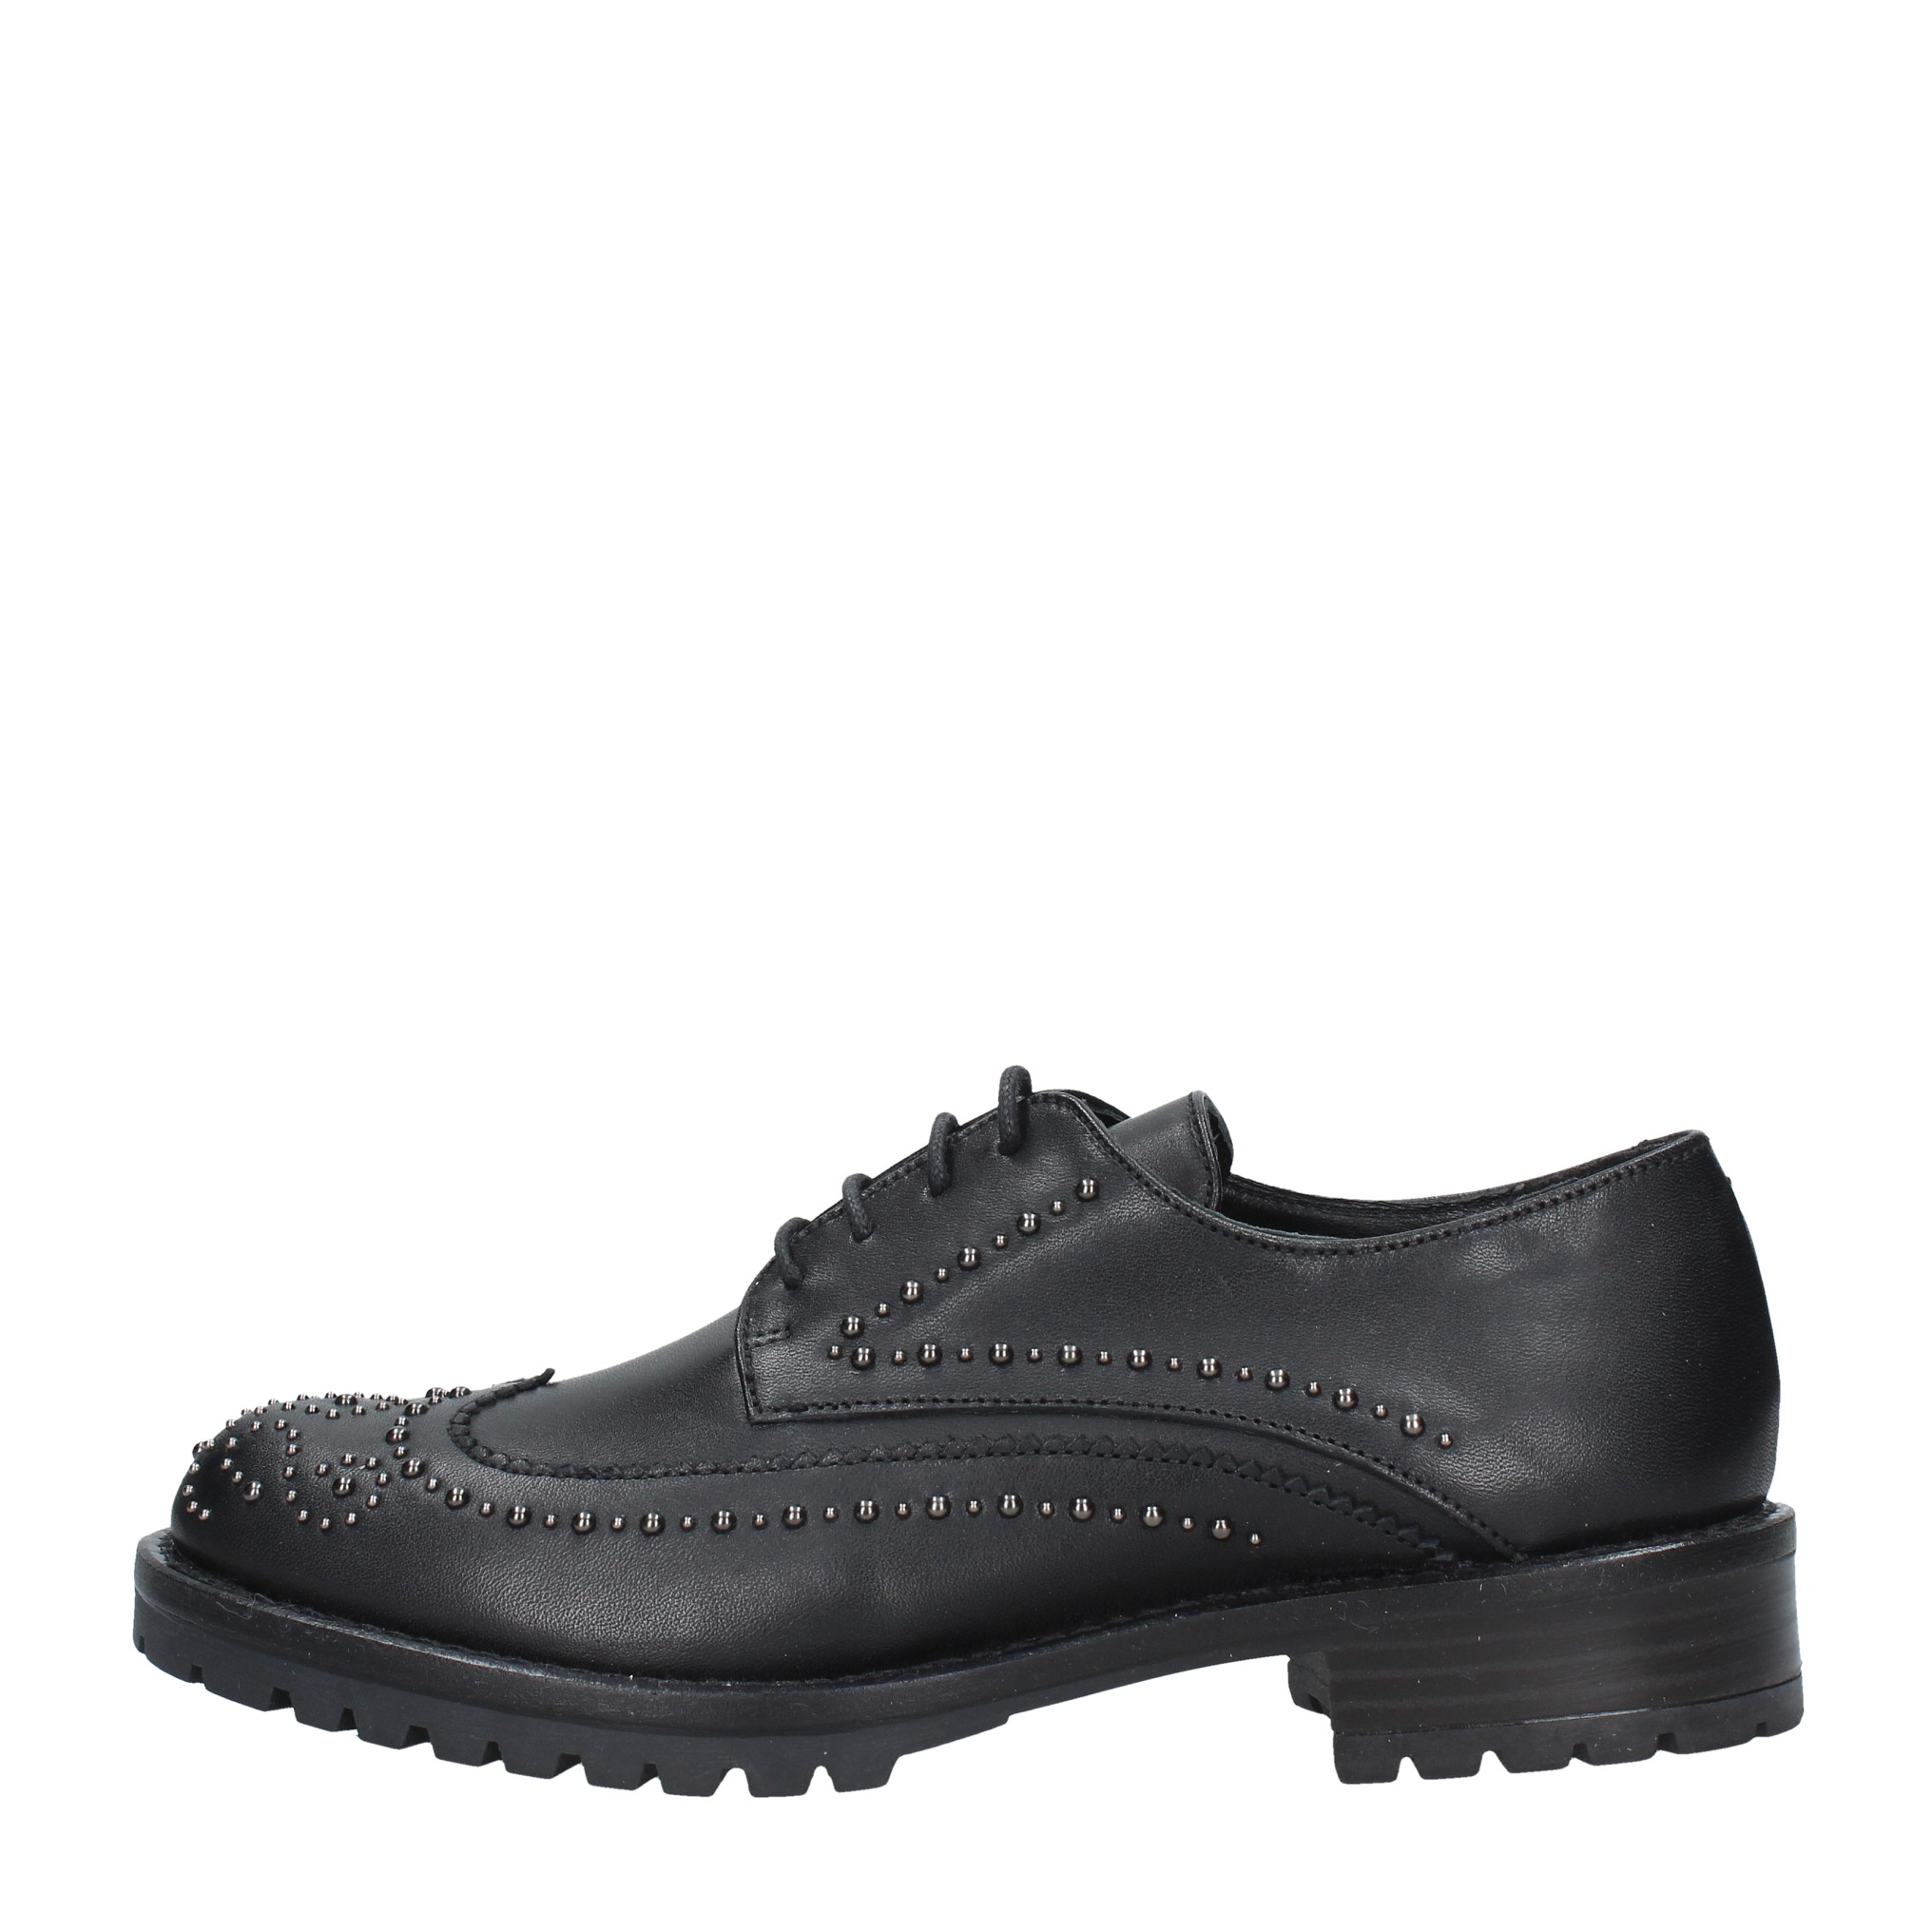 Laced shoes Black - ERMANNO SCERVINO - Ginevra calzature